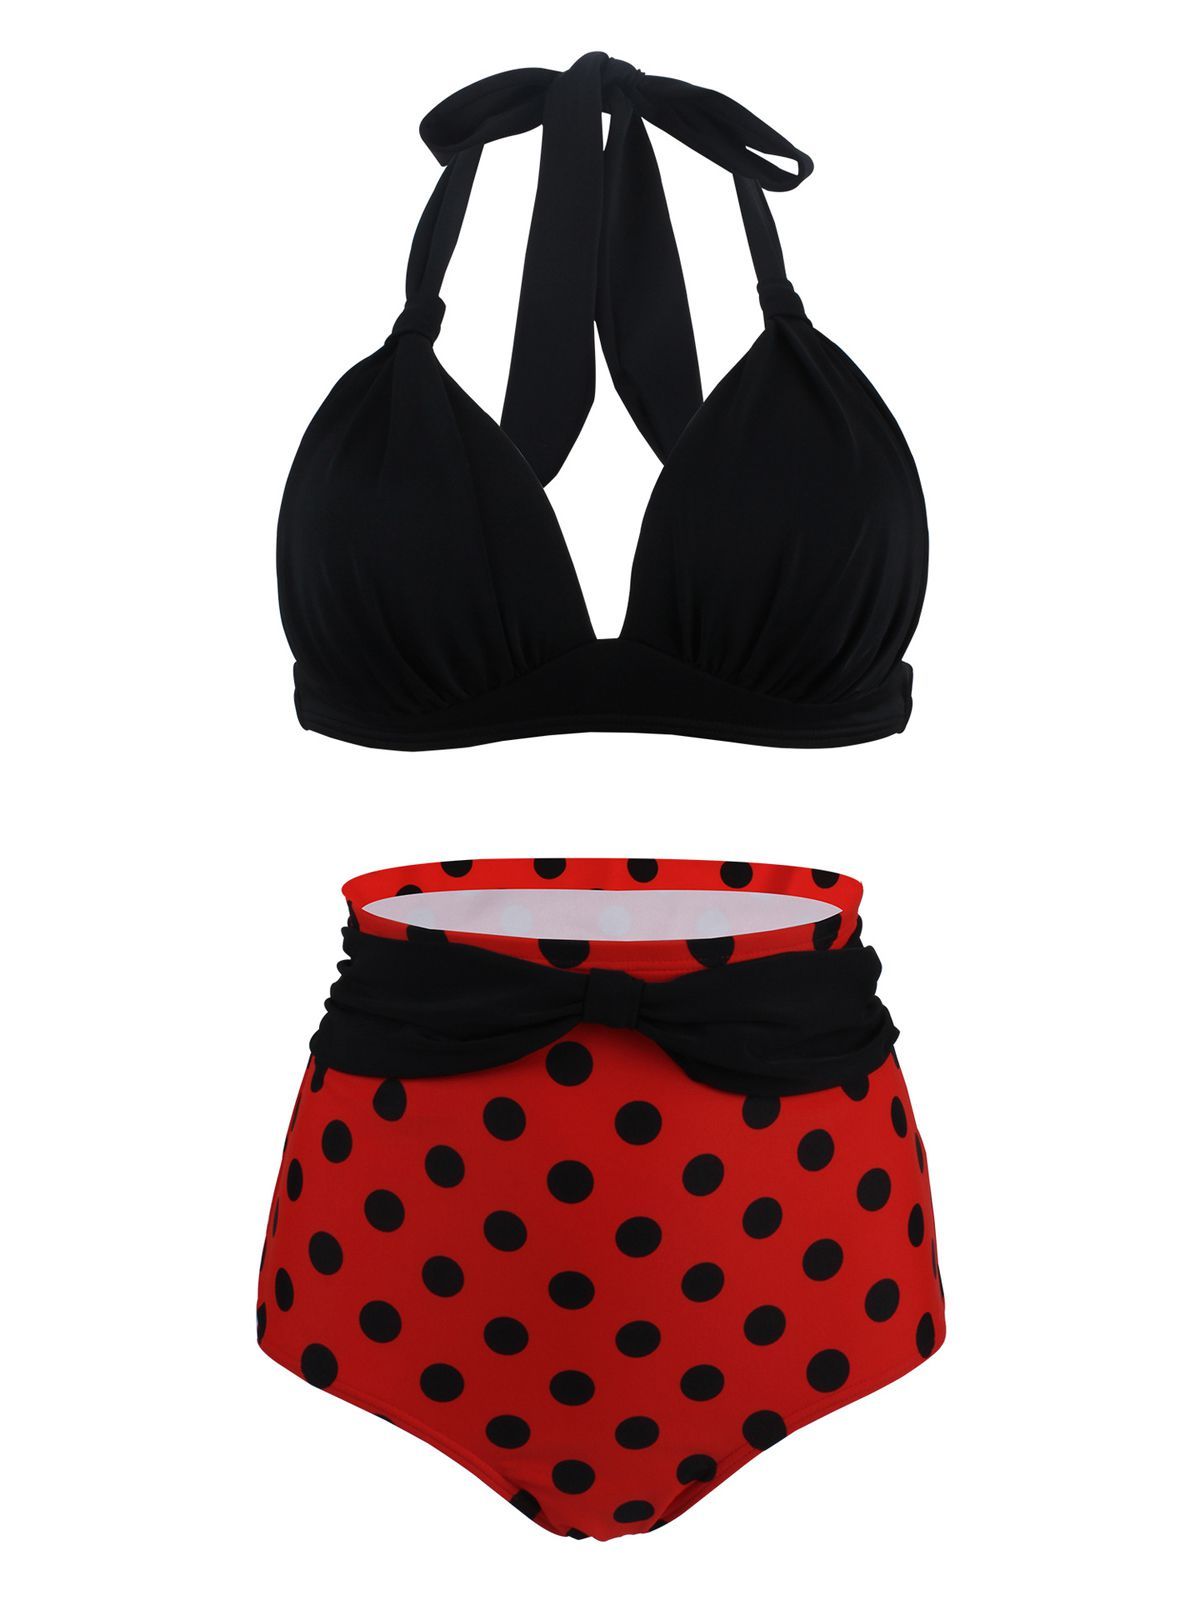 Upopby Polka Dot Pleated Halter Bikini Plus Size Swimsuit details